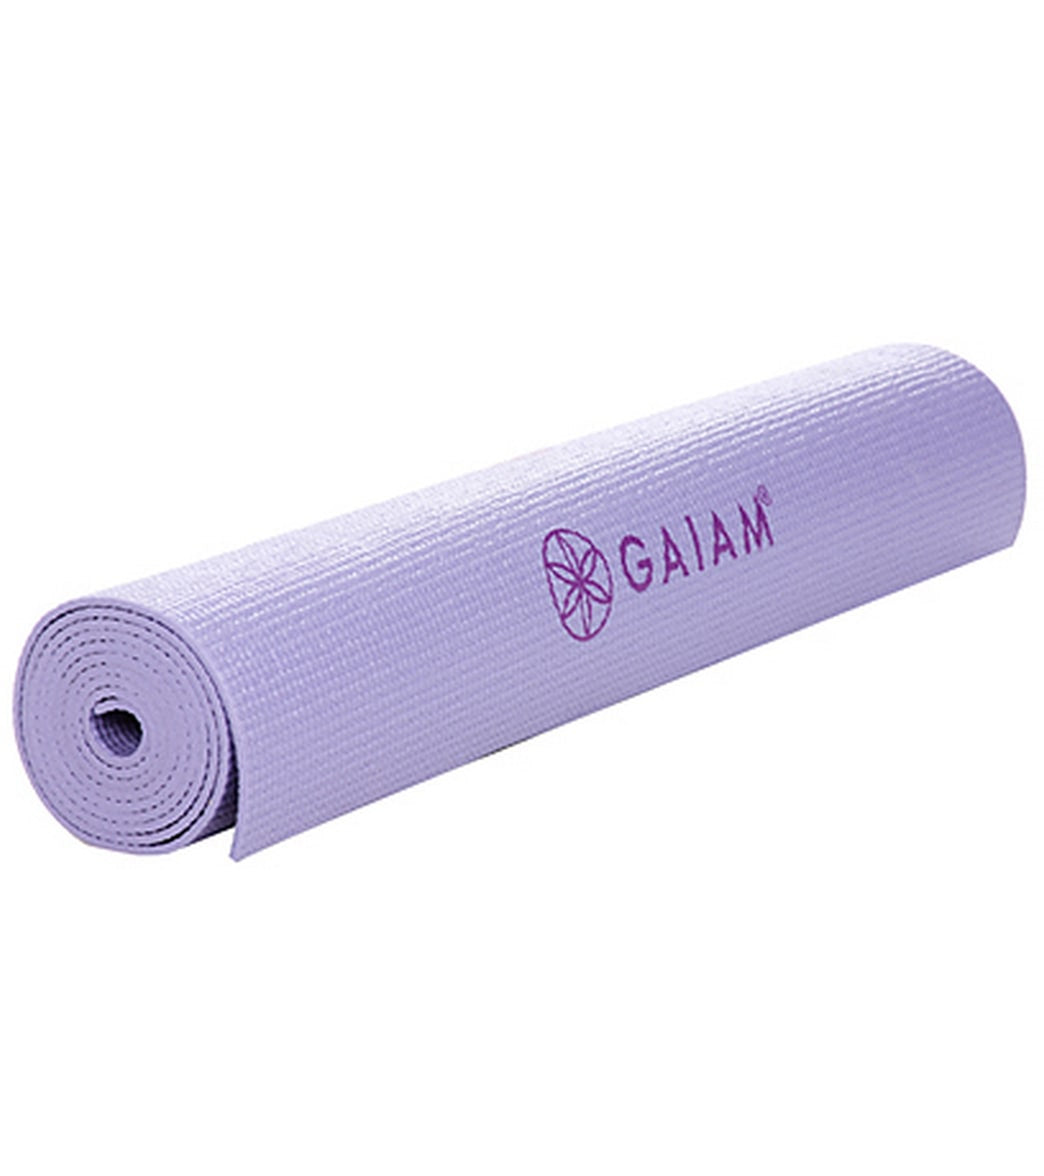 Gaiam Chakra Yoga Mat 68 3mm at